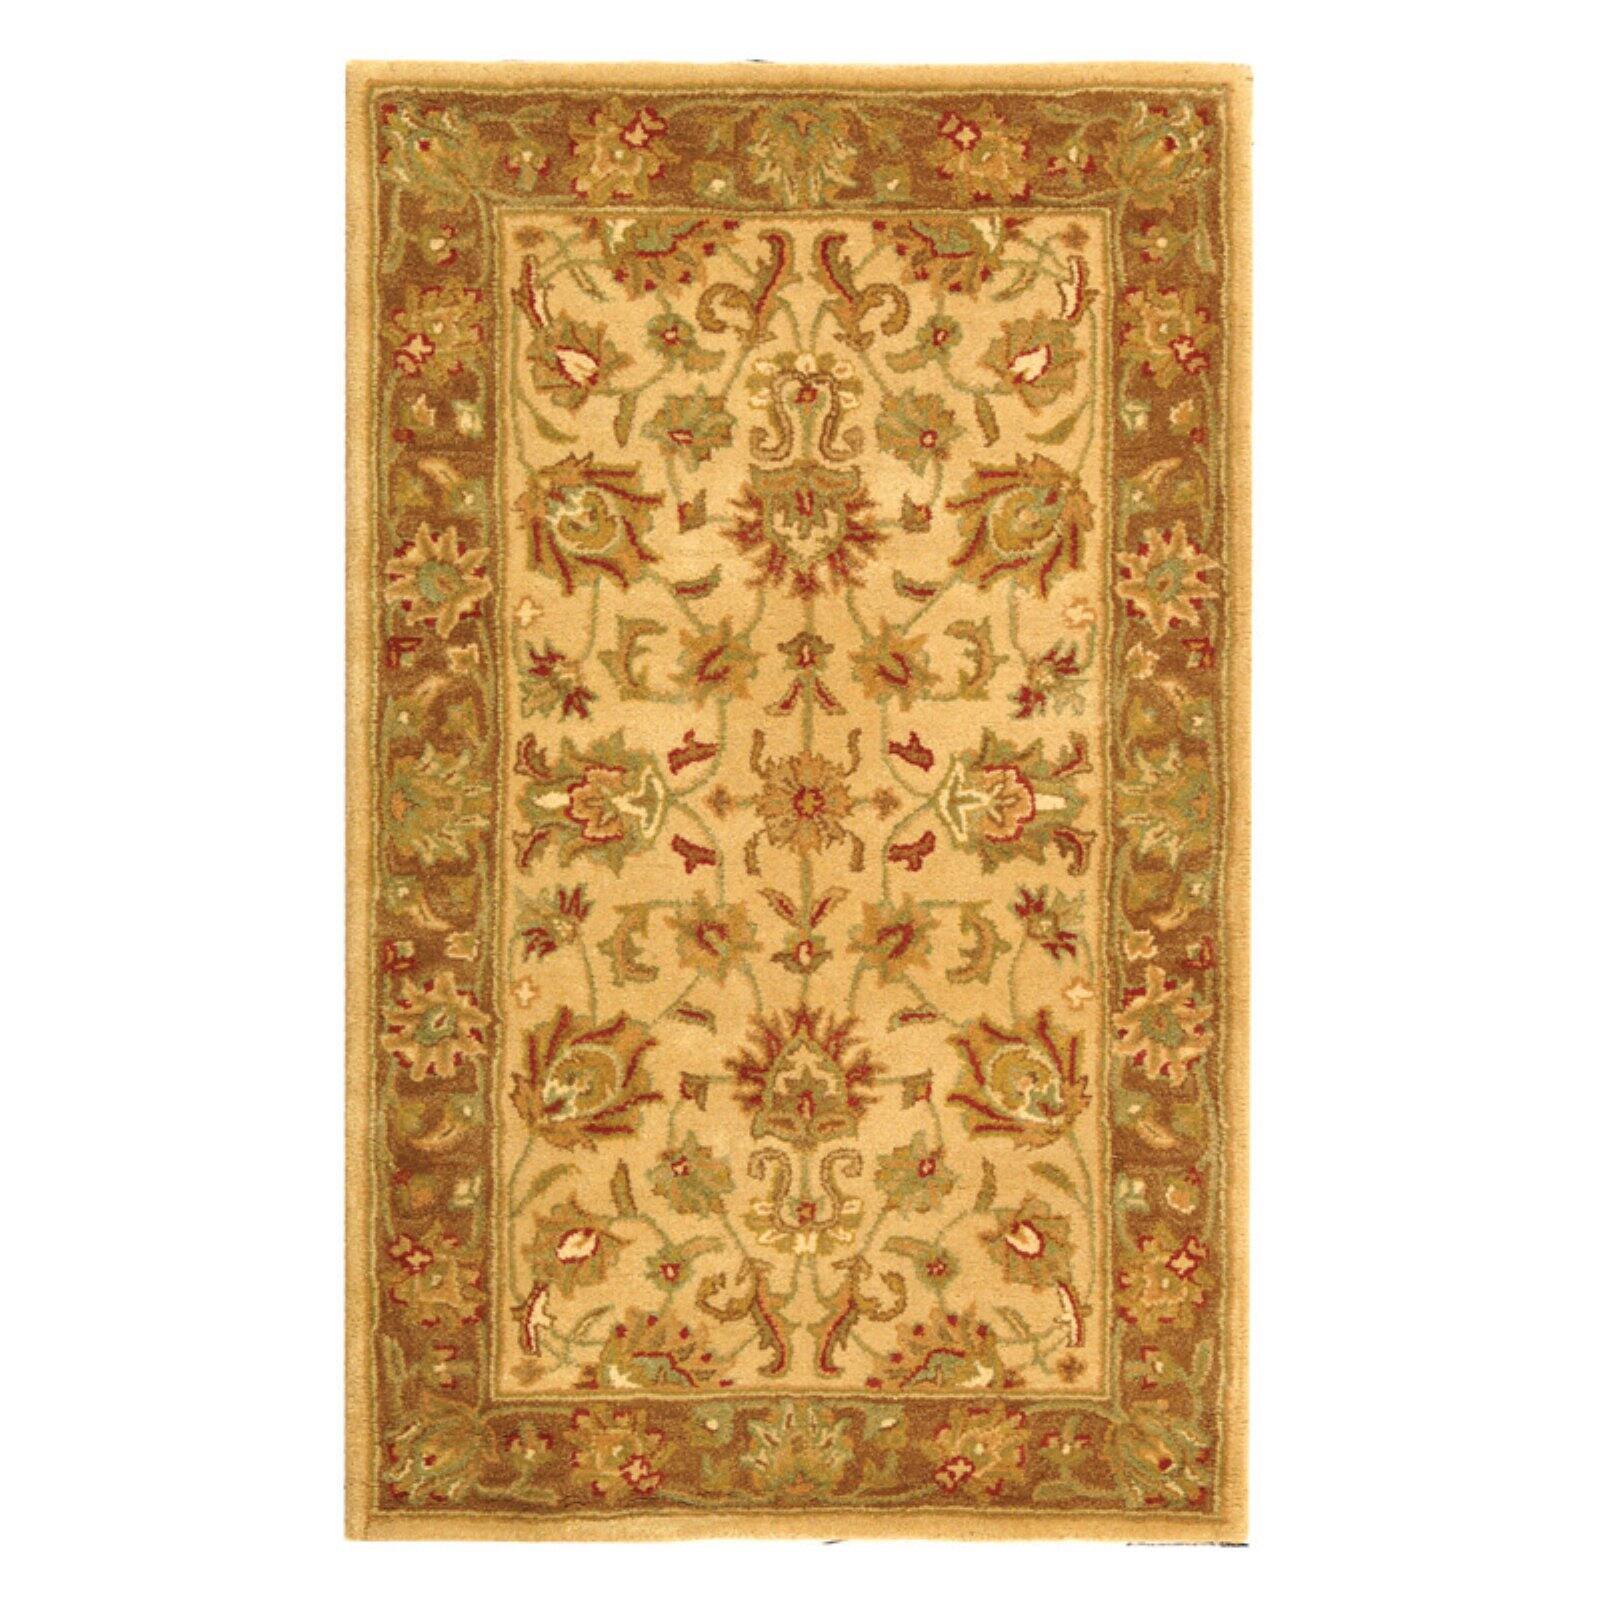 SAFAVIEH Heritage Regis Traditional Wool Area Rug, Ivory/Brown, 3'6" x 3'6" Round - image 5 of 9